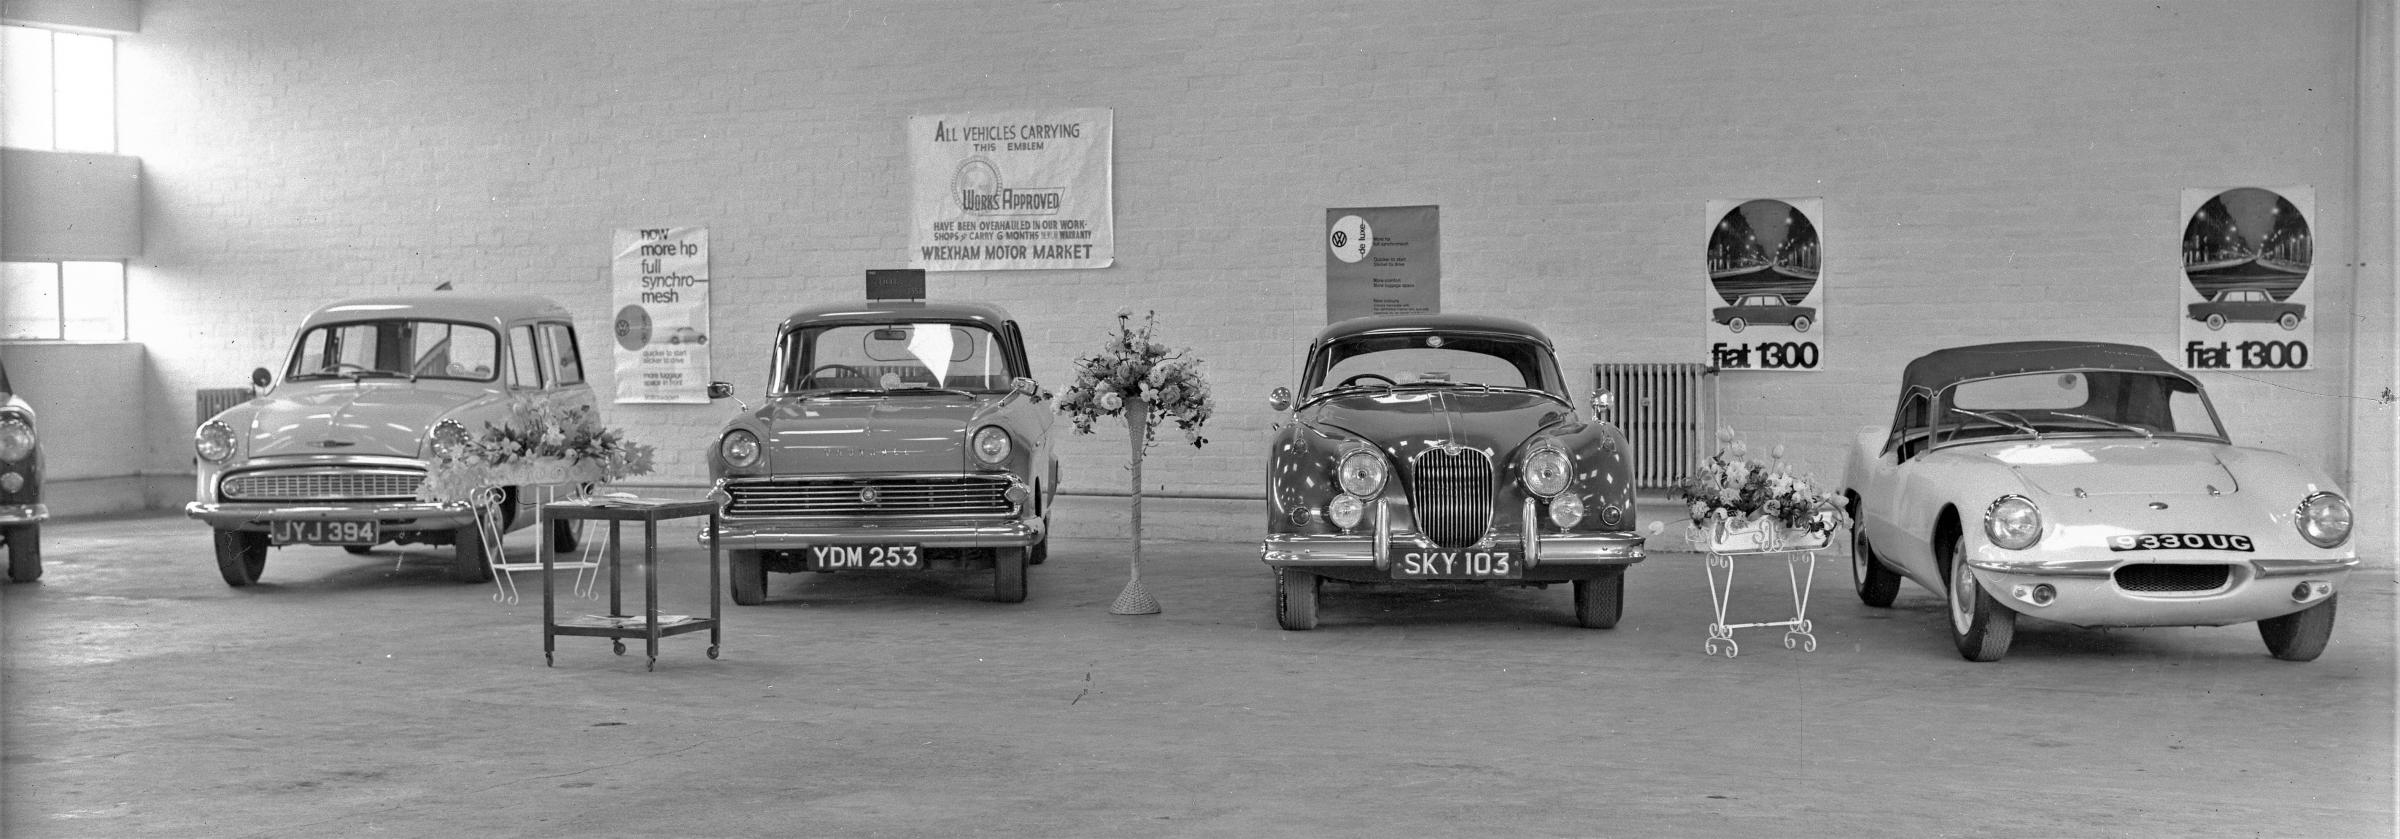 Wrexham Car Market, 1962